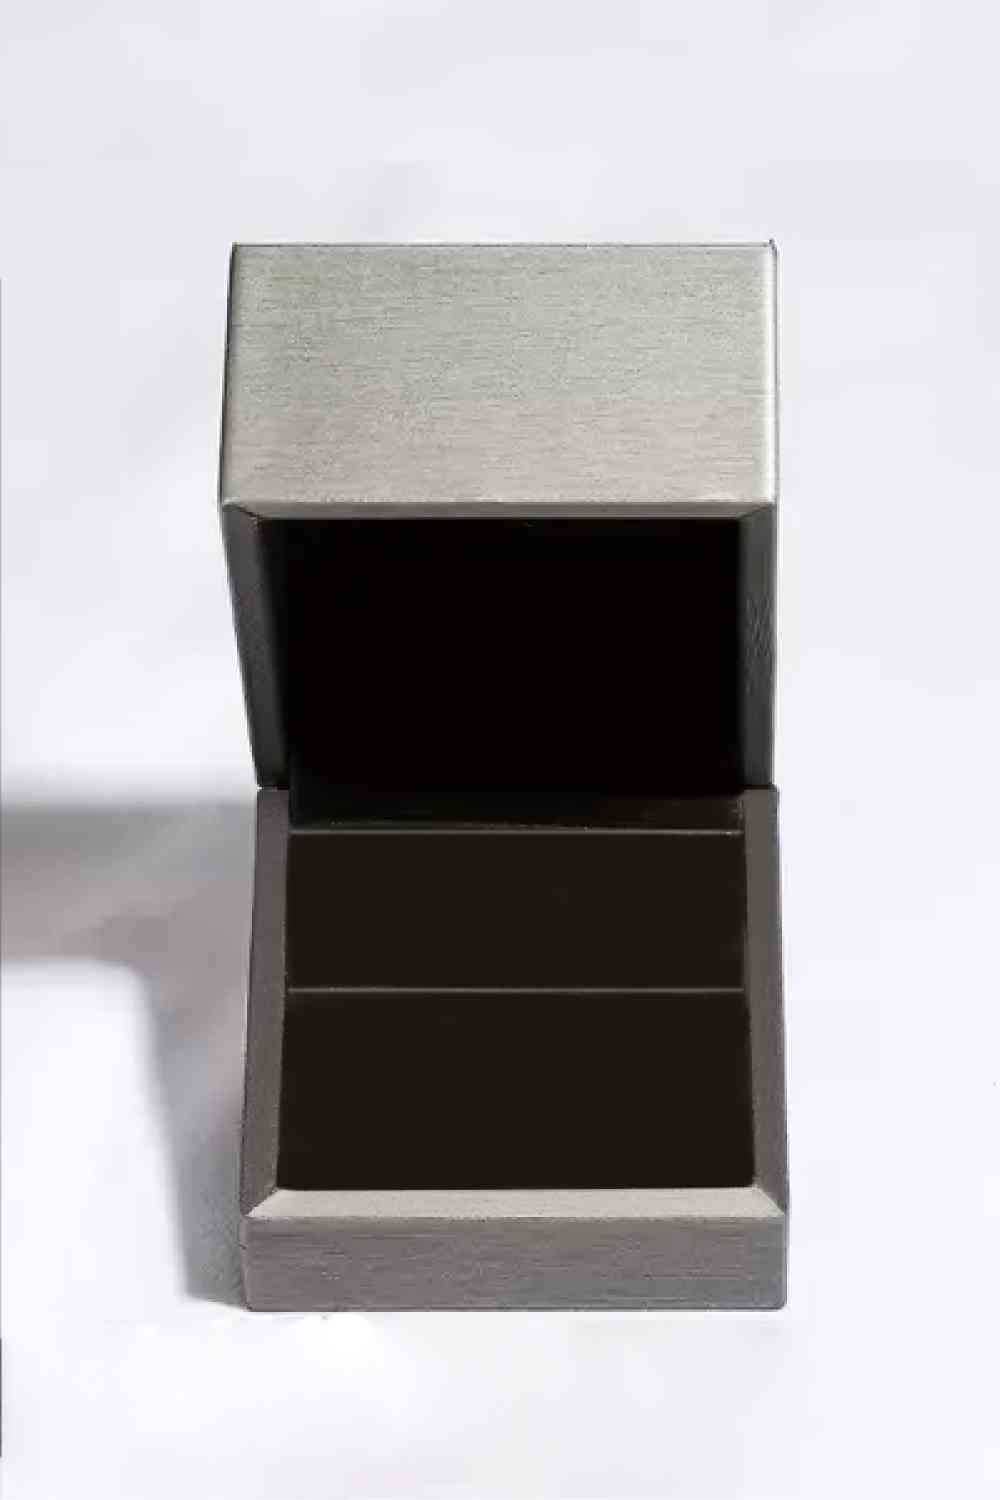 Minimalist 925 Sterling Silver Rhodium-Plated Ring Men/Womens - Tigbuls Variety Fashion